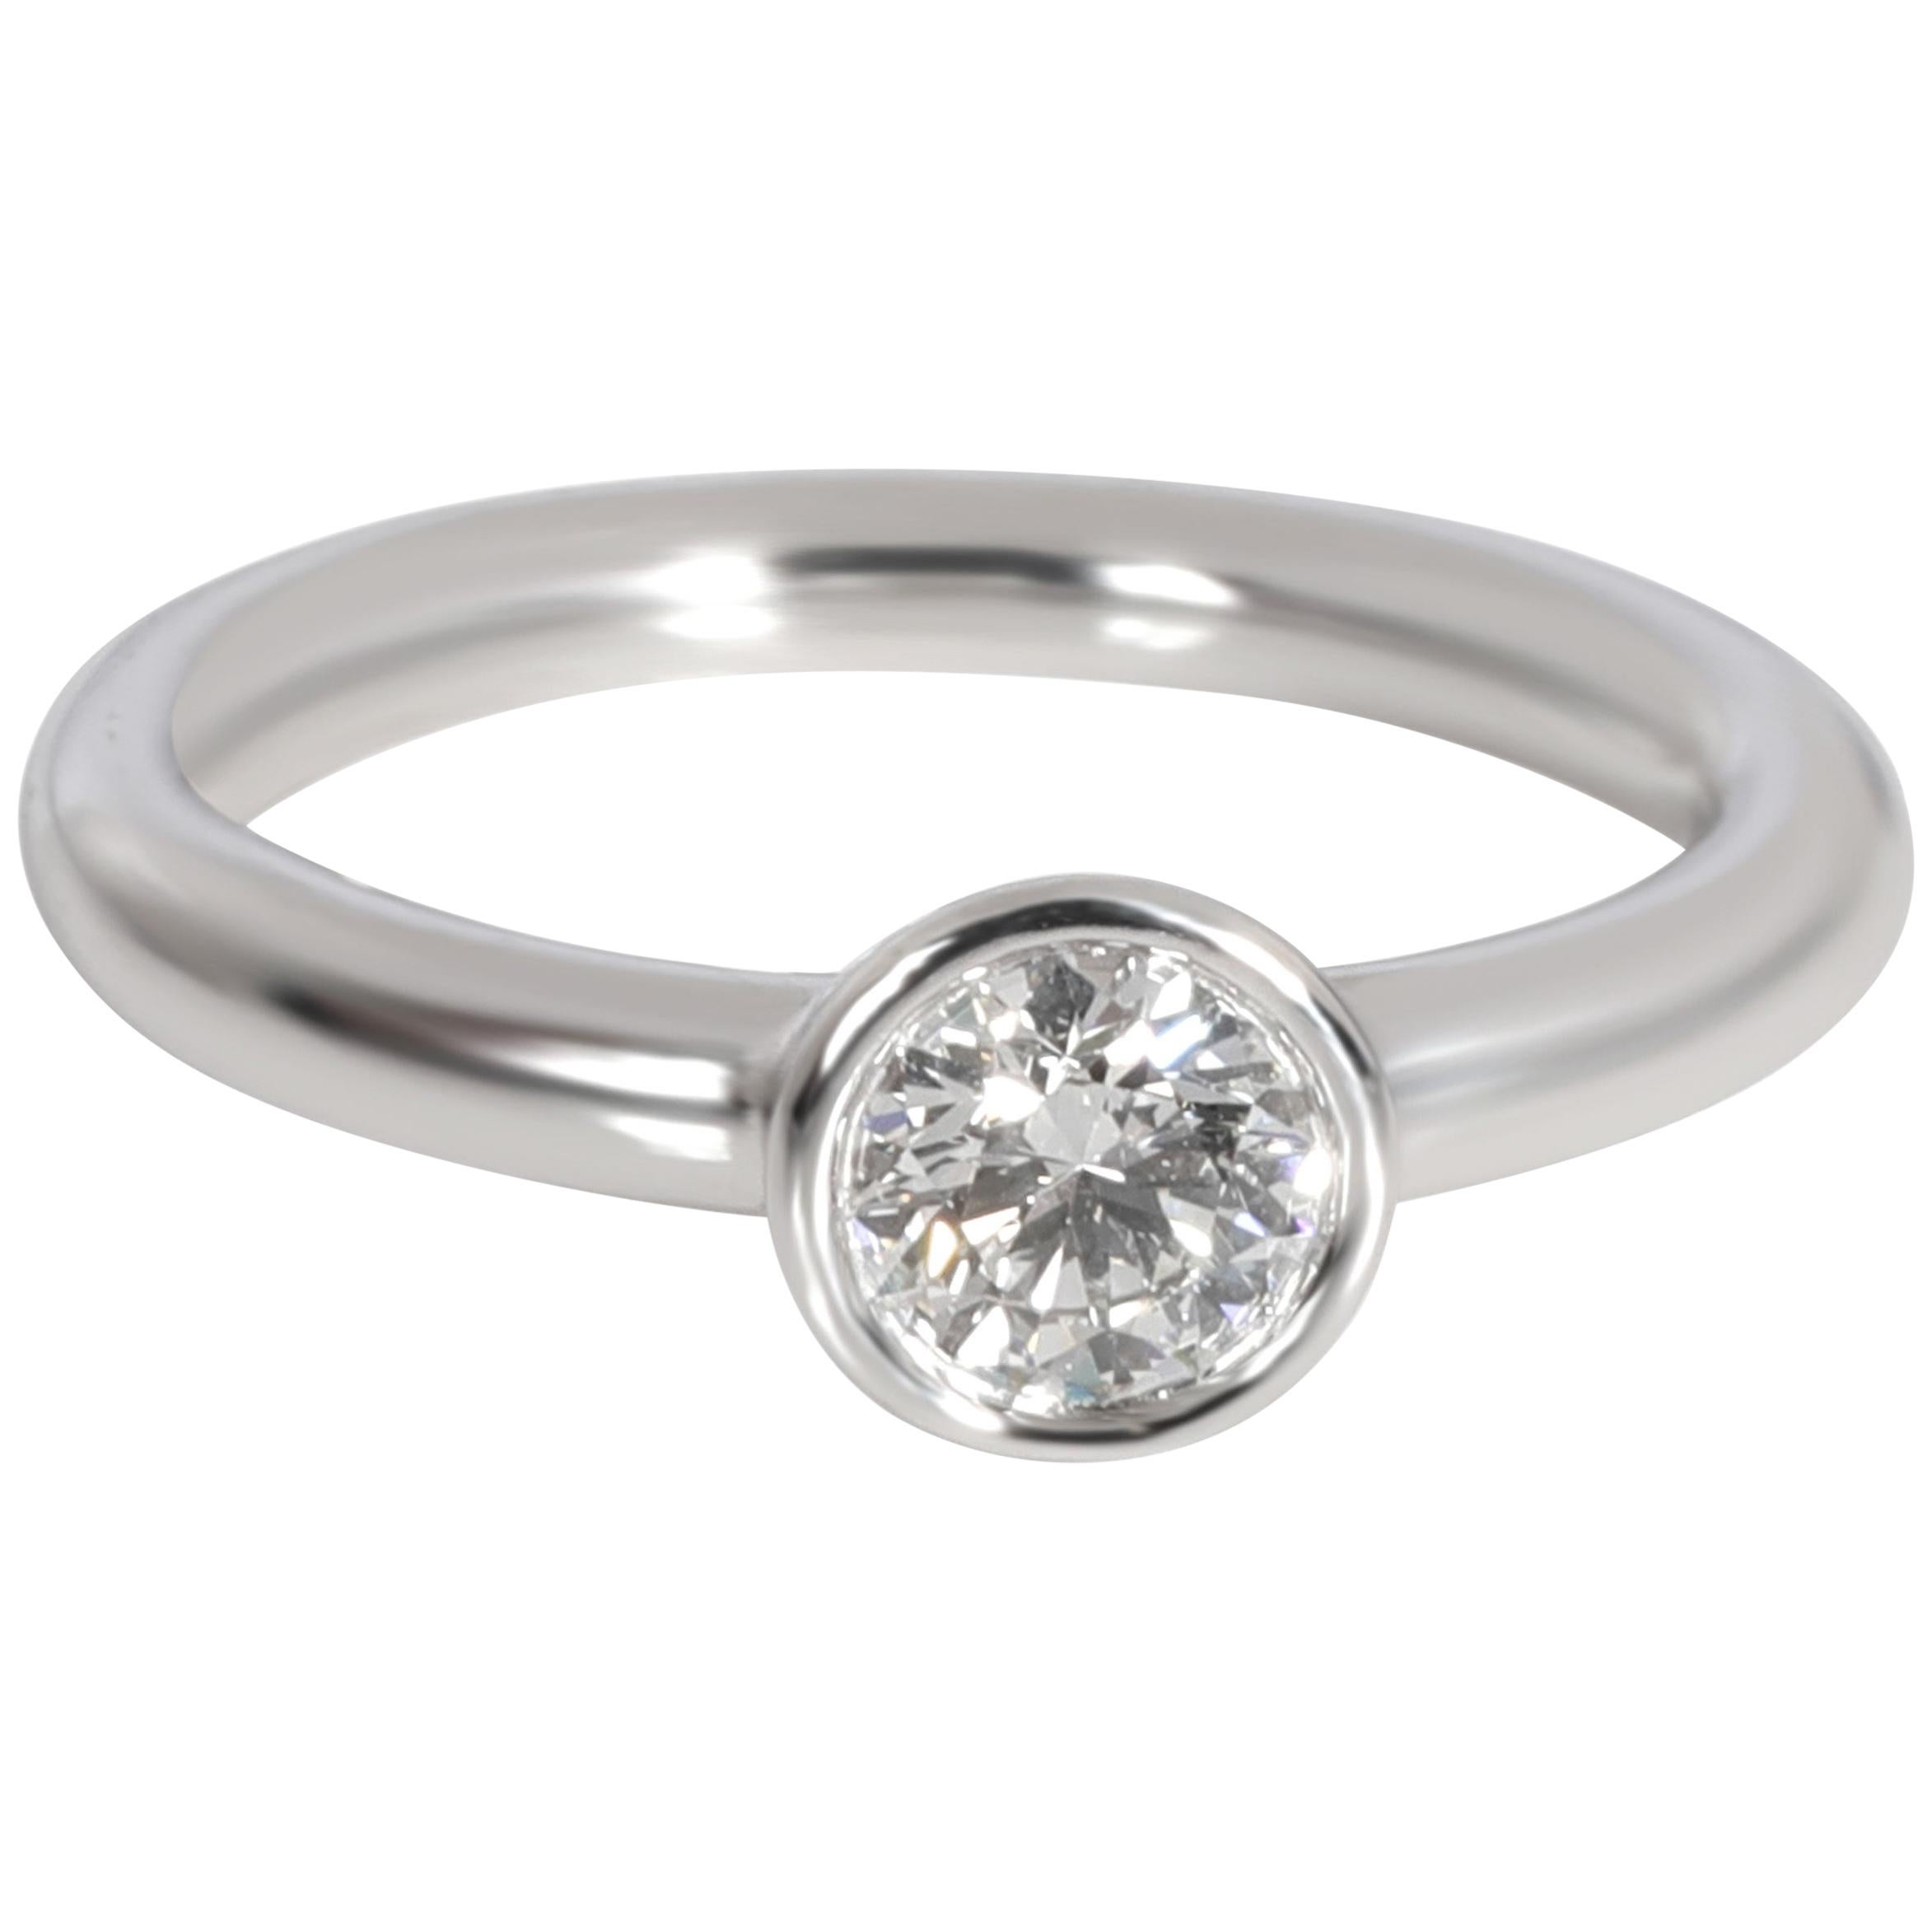 Tiffany & Co. Bezel Diamond Engagement Ring in Platinum D VVS2 0.40 Carat